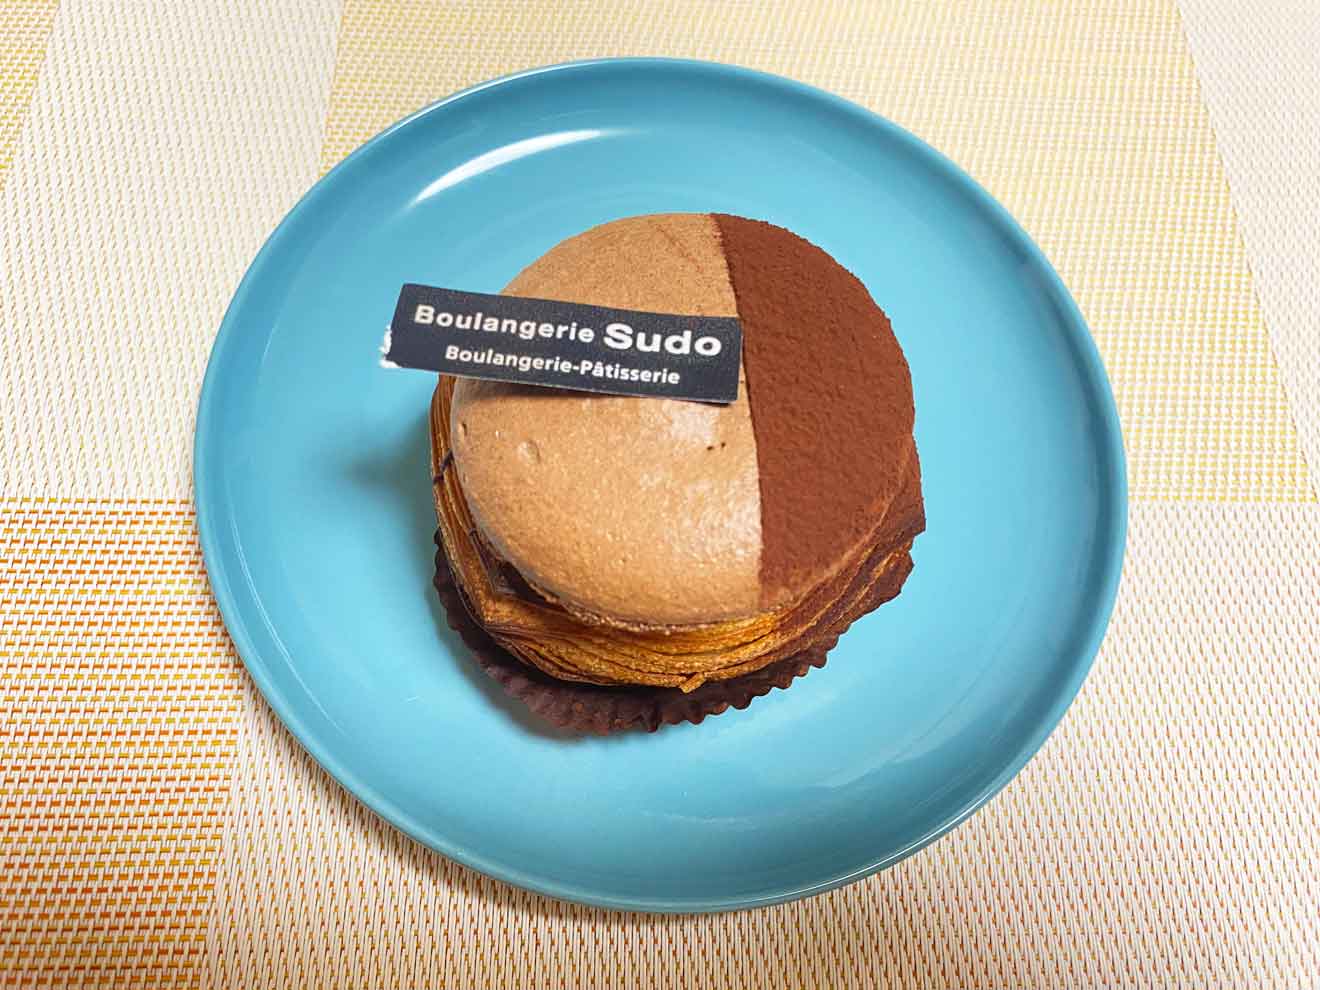 「Boulangerie Sudo」のマカロンショコラフランボワーズ